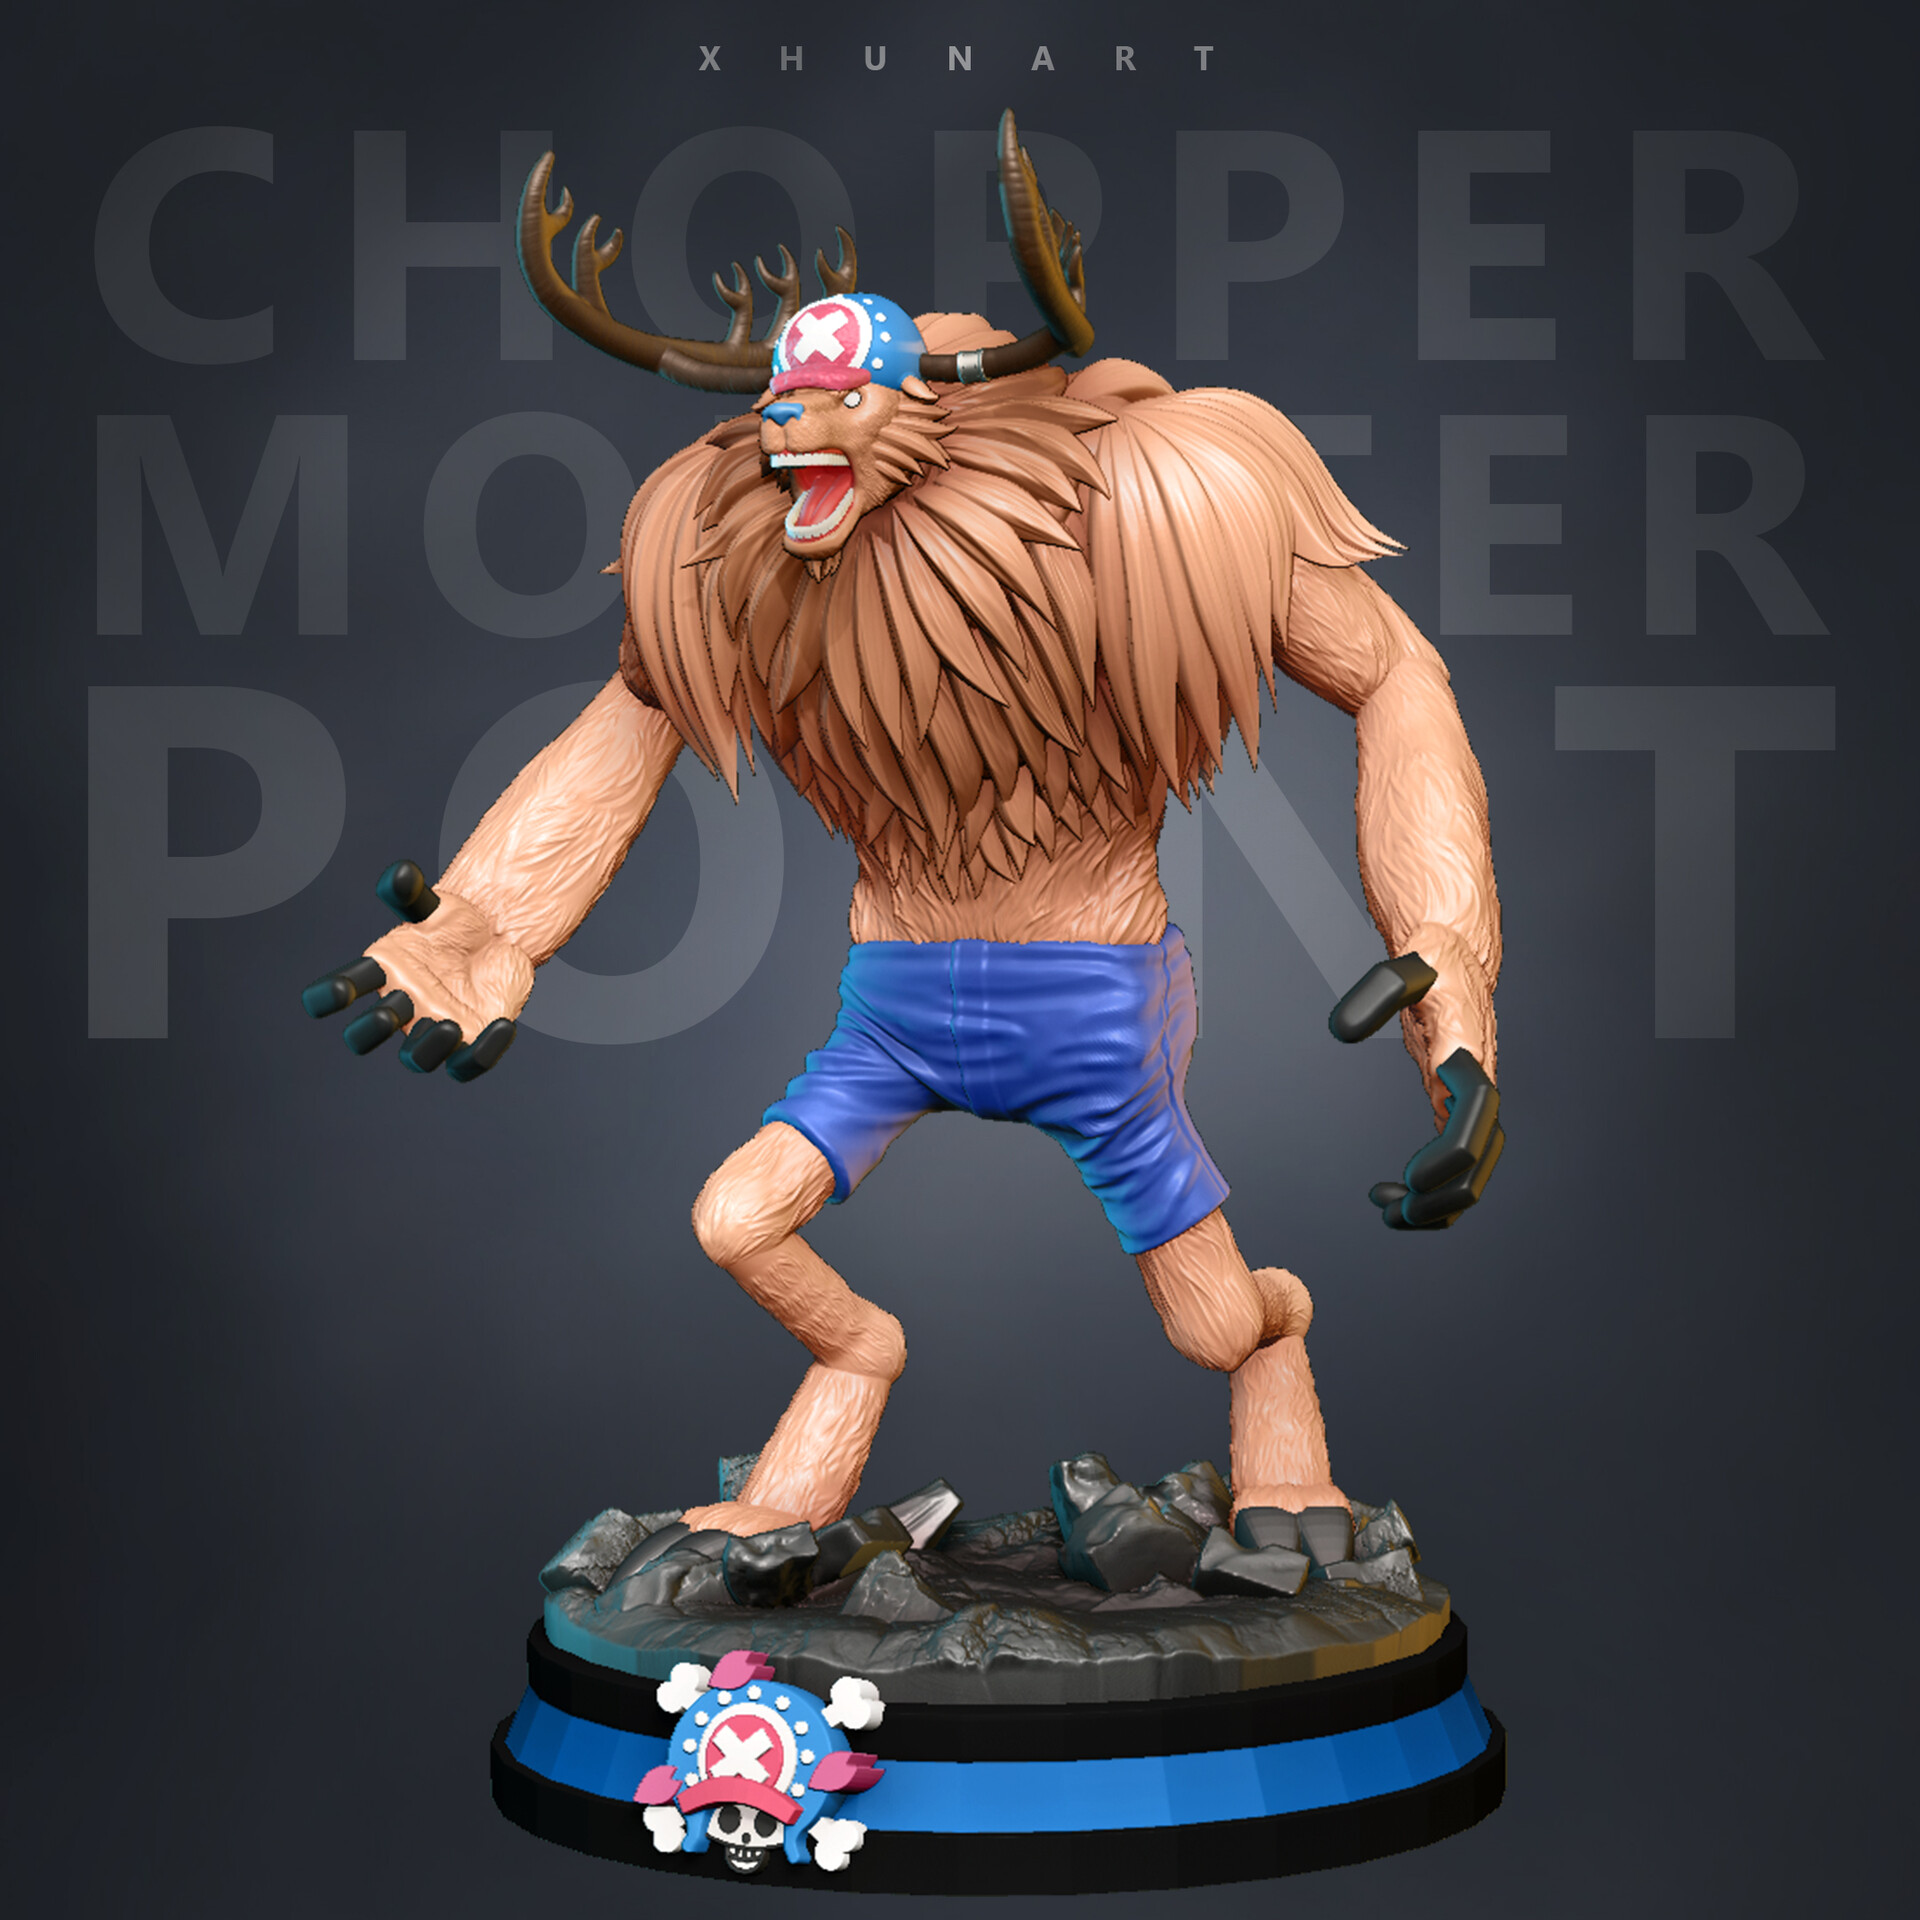 Chopper Monster Point by Xhunart on DeviantArt